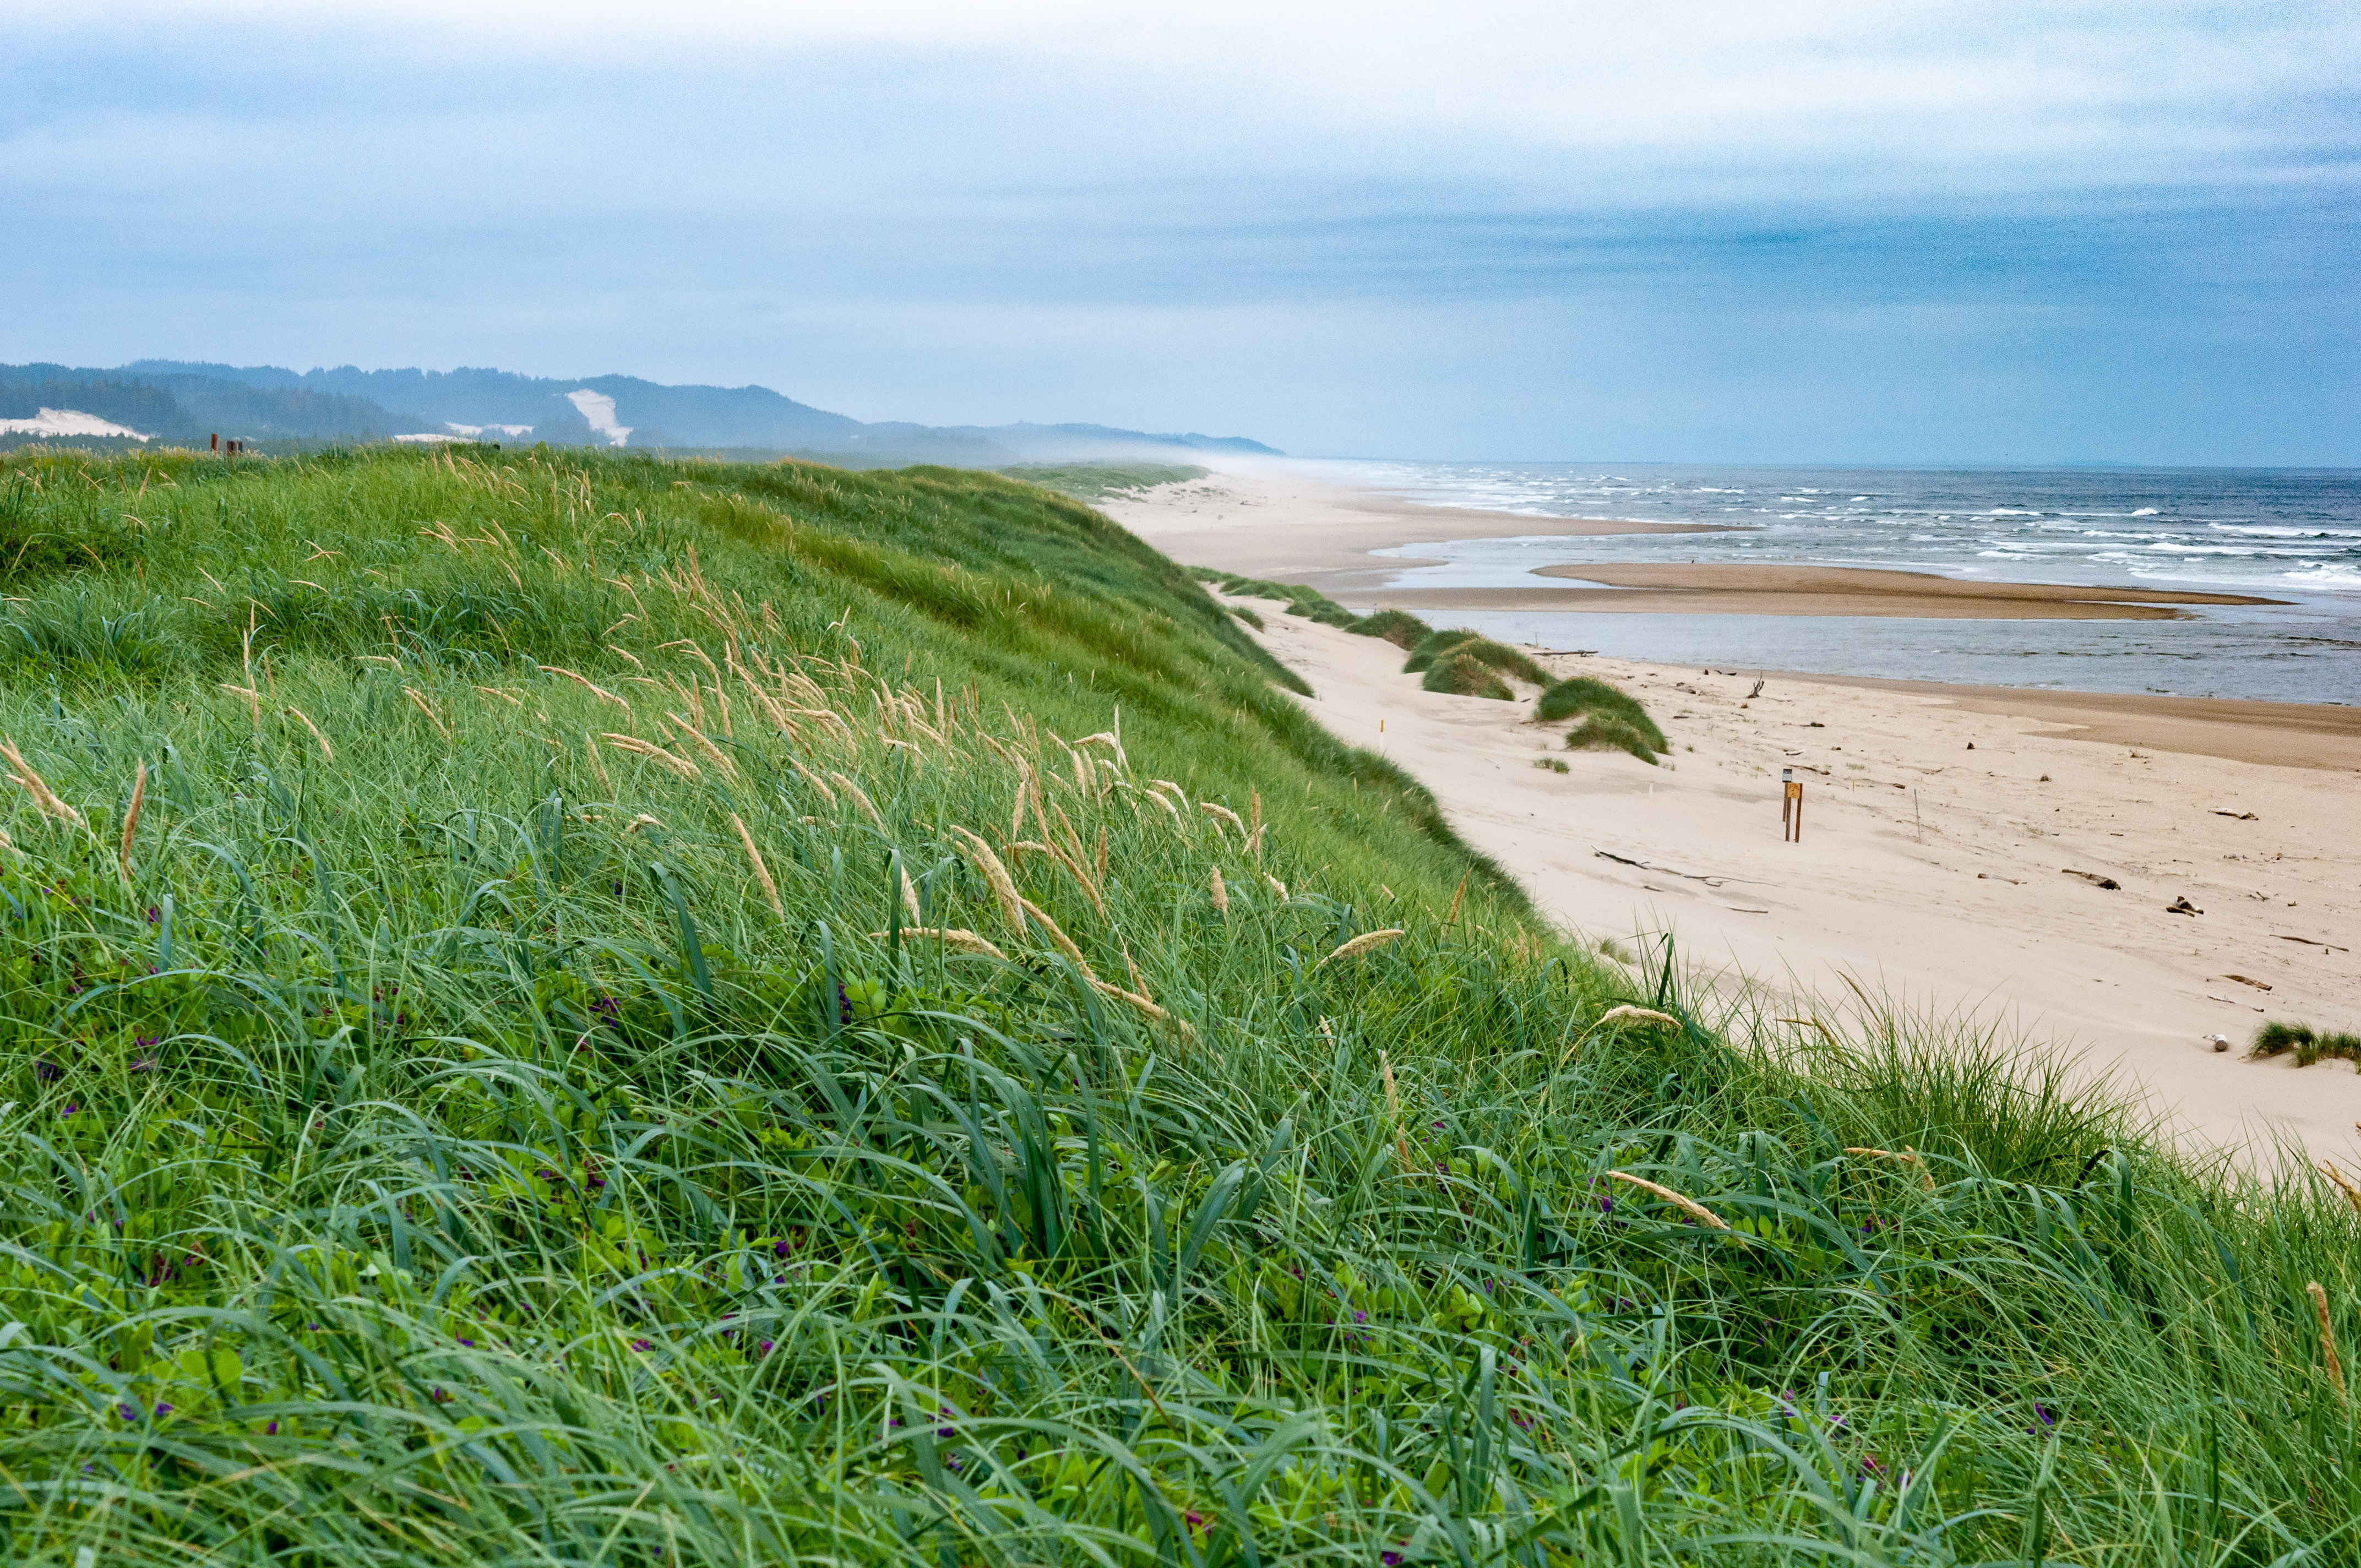 Dunes stabilized by introduced European beachgrass no longer provide habitat for native grasses. Photo by Robert Korfhage